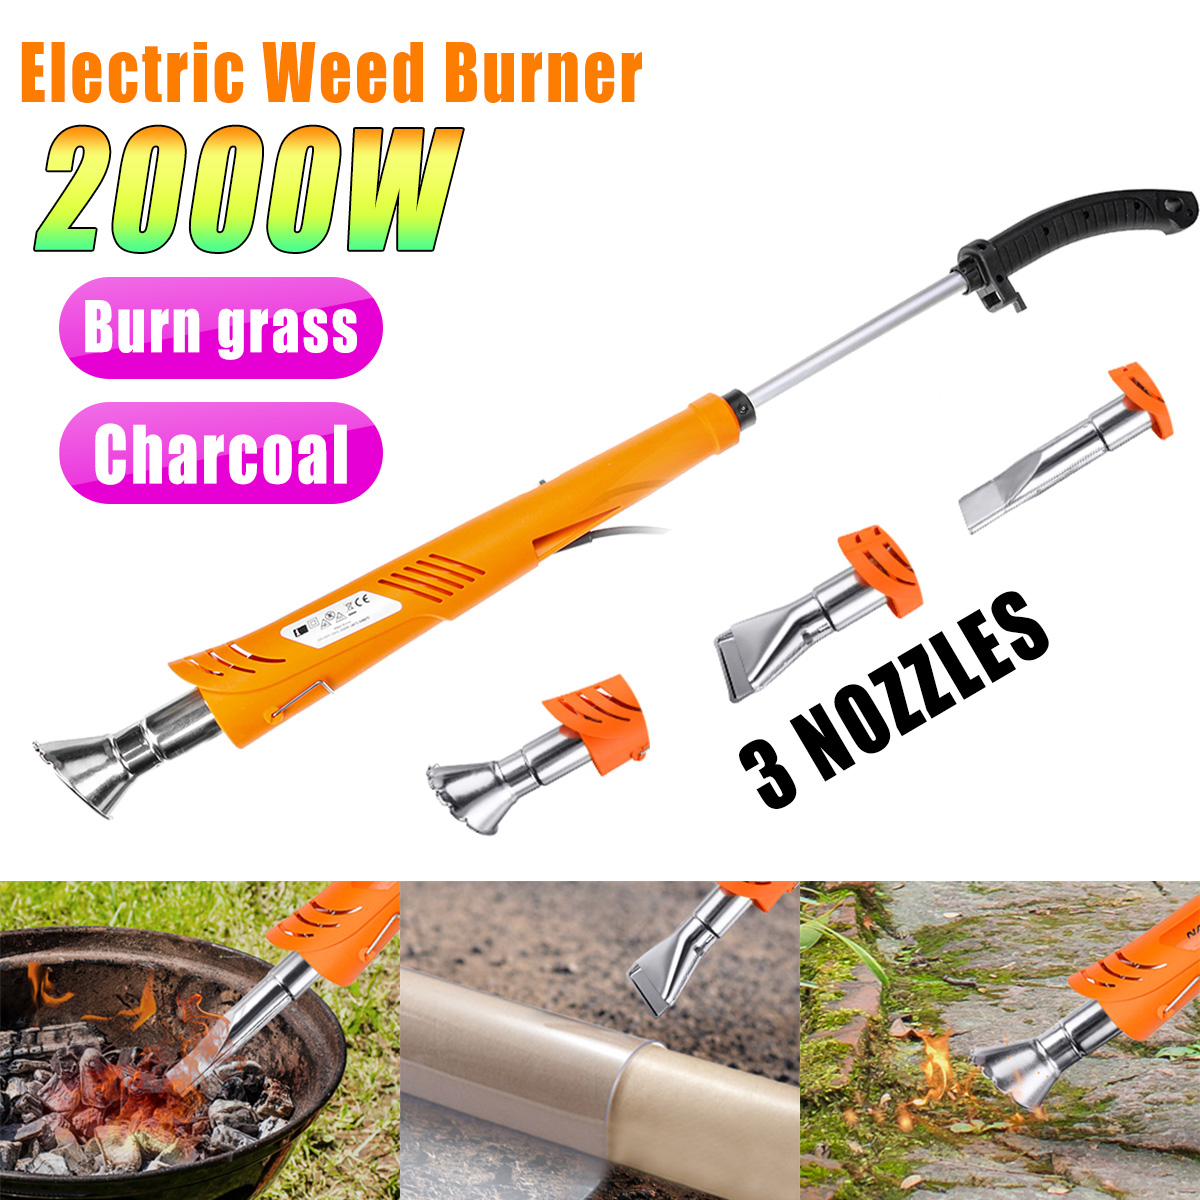 Electric-Weed-Burner-Garden-Gear-Weed-Killer-Lawn-Wand-Torch-Tools-2000W-230V-UK-Plug-1695567